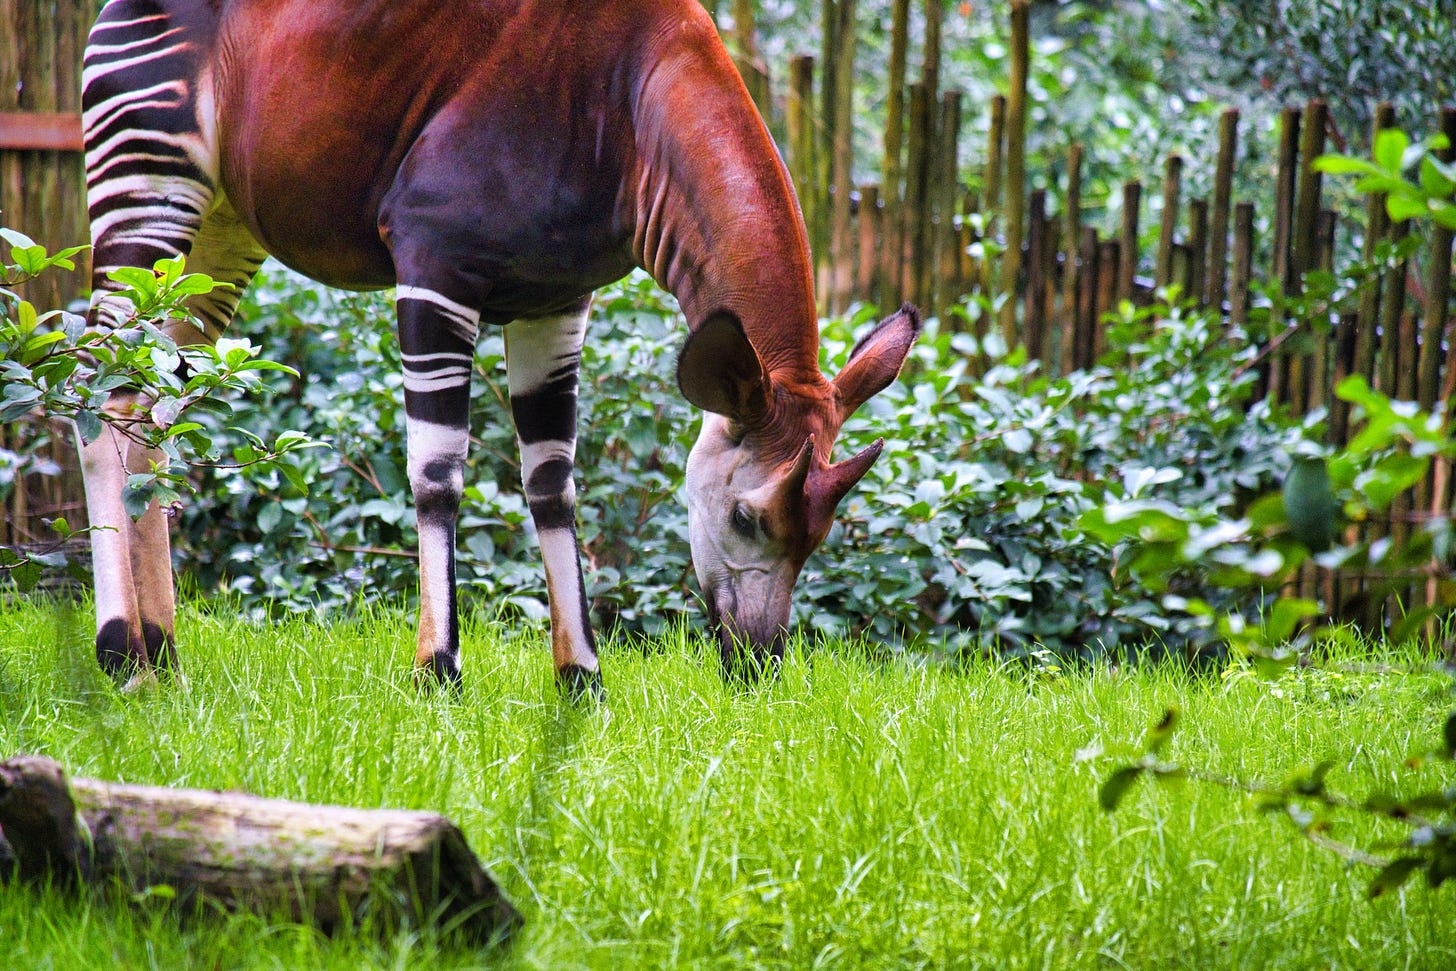 Okapi, also known as a forest giraffe, from a recent trip to Walt Disney World.